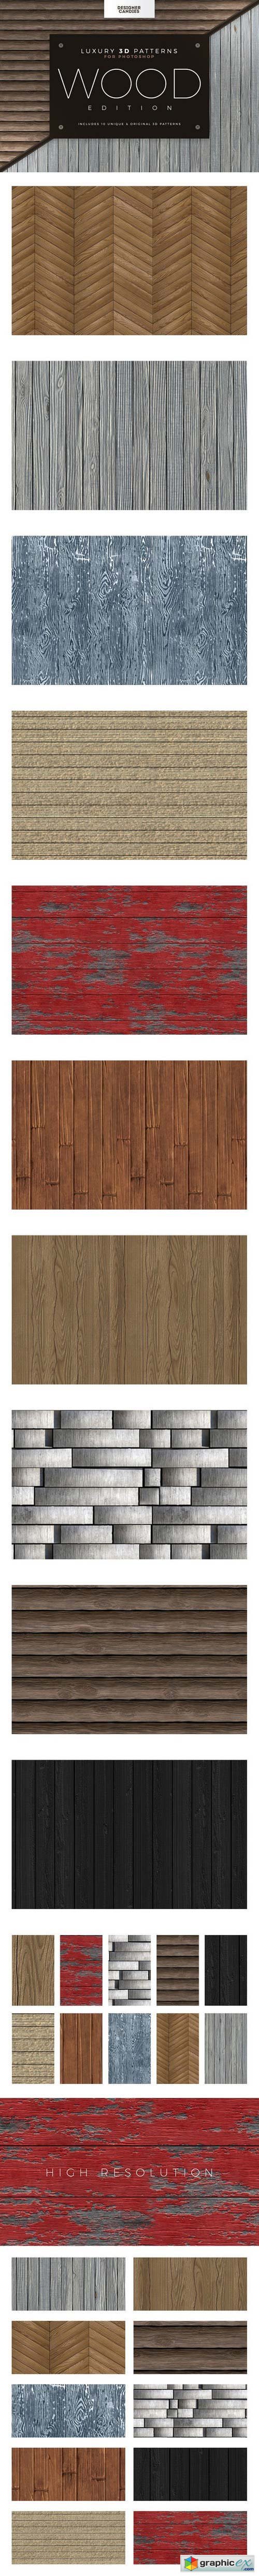 Seamless 3D Wood Patterns & Textures